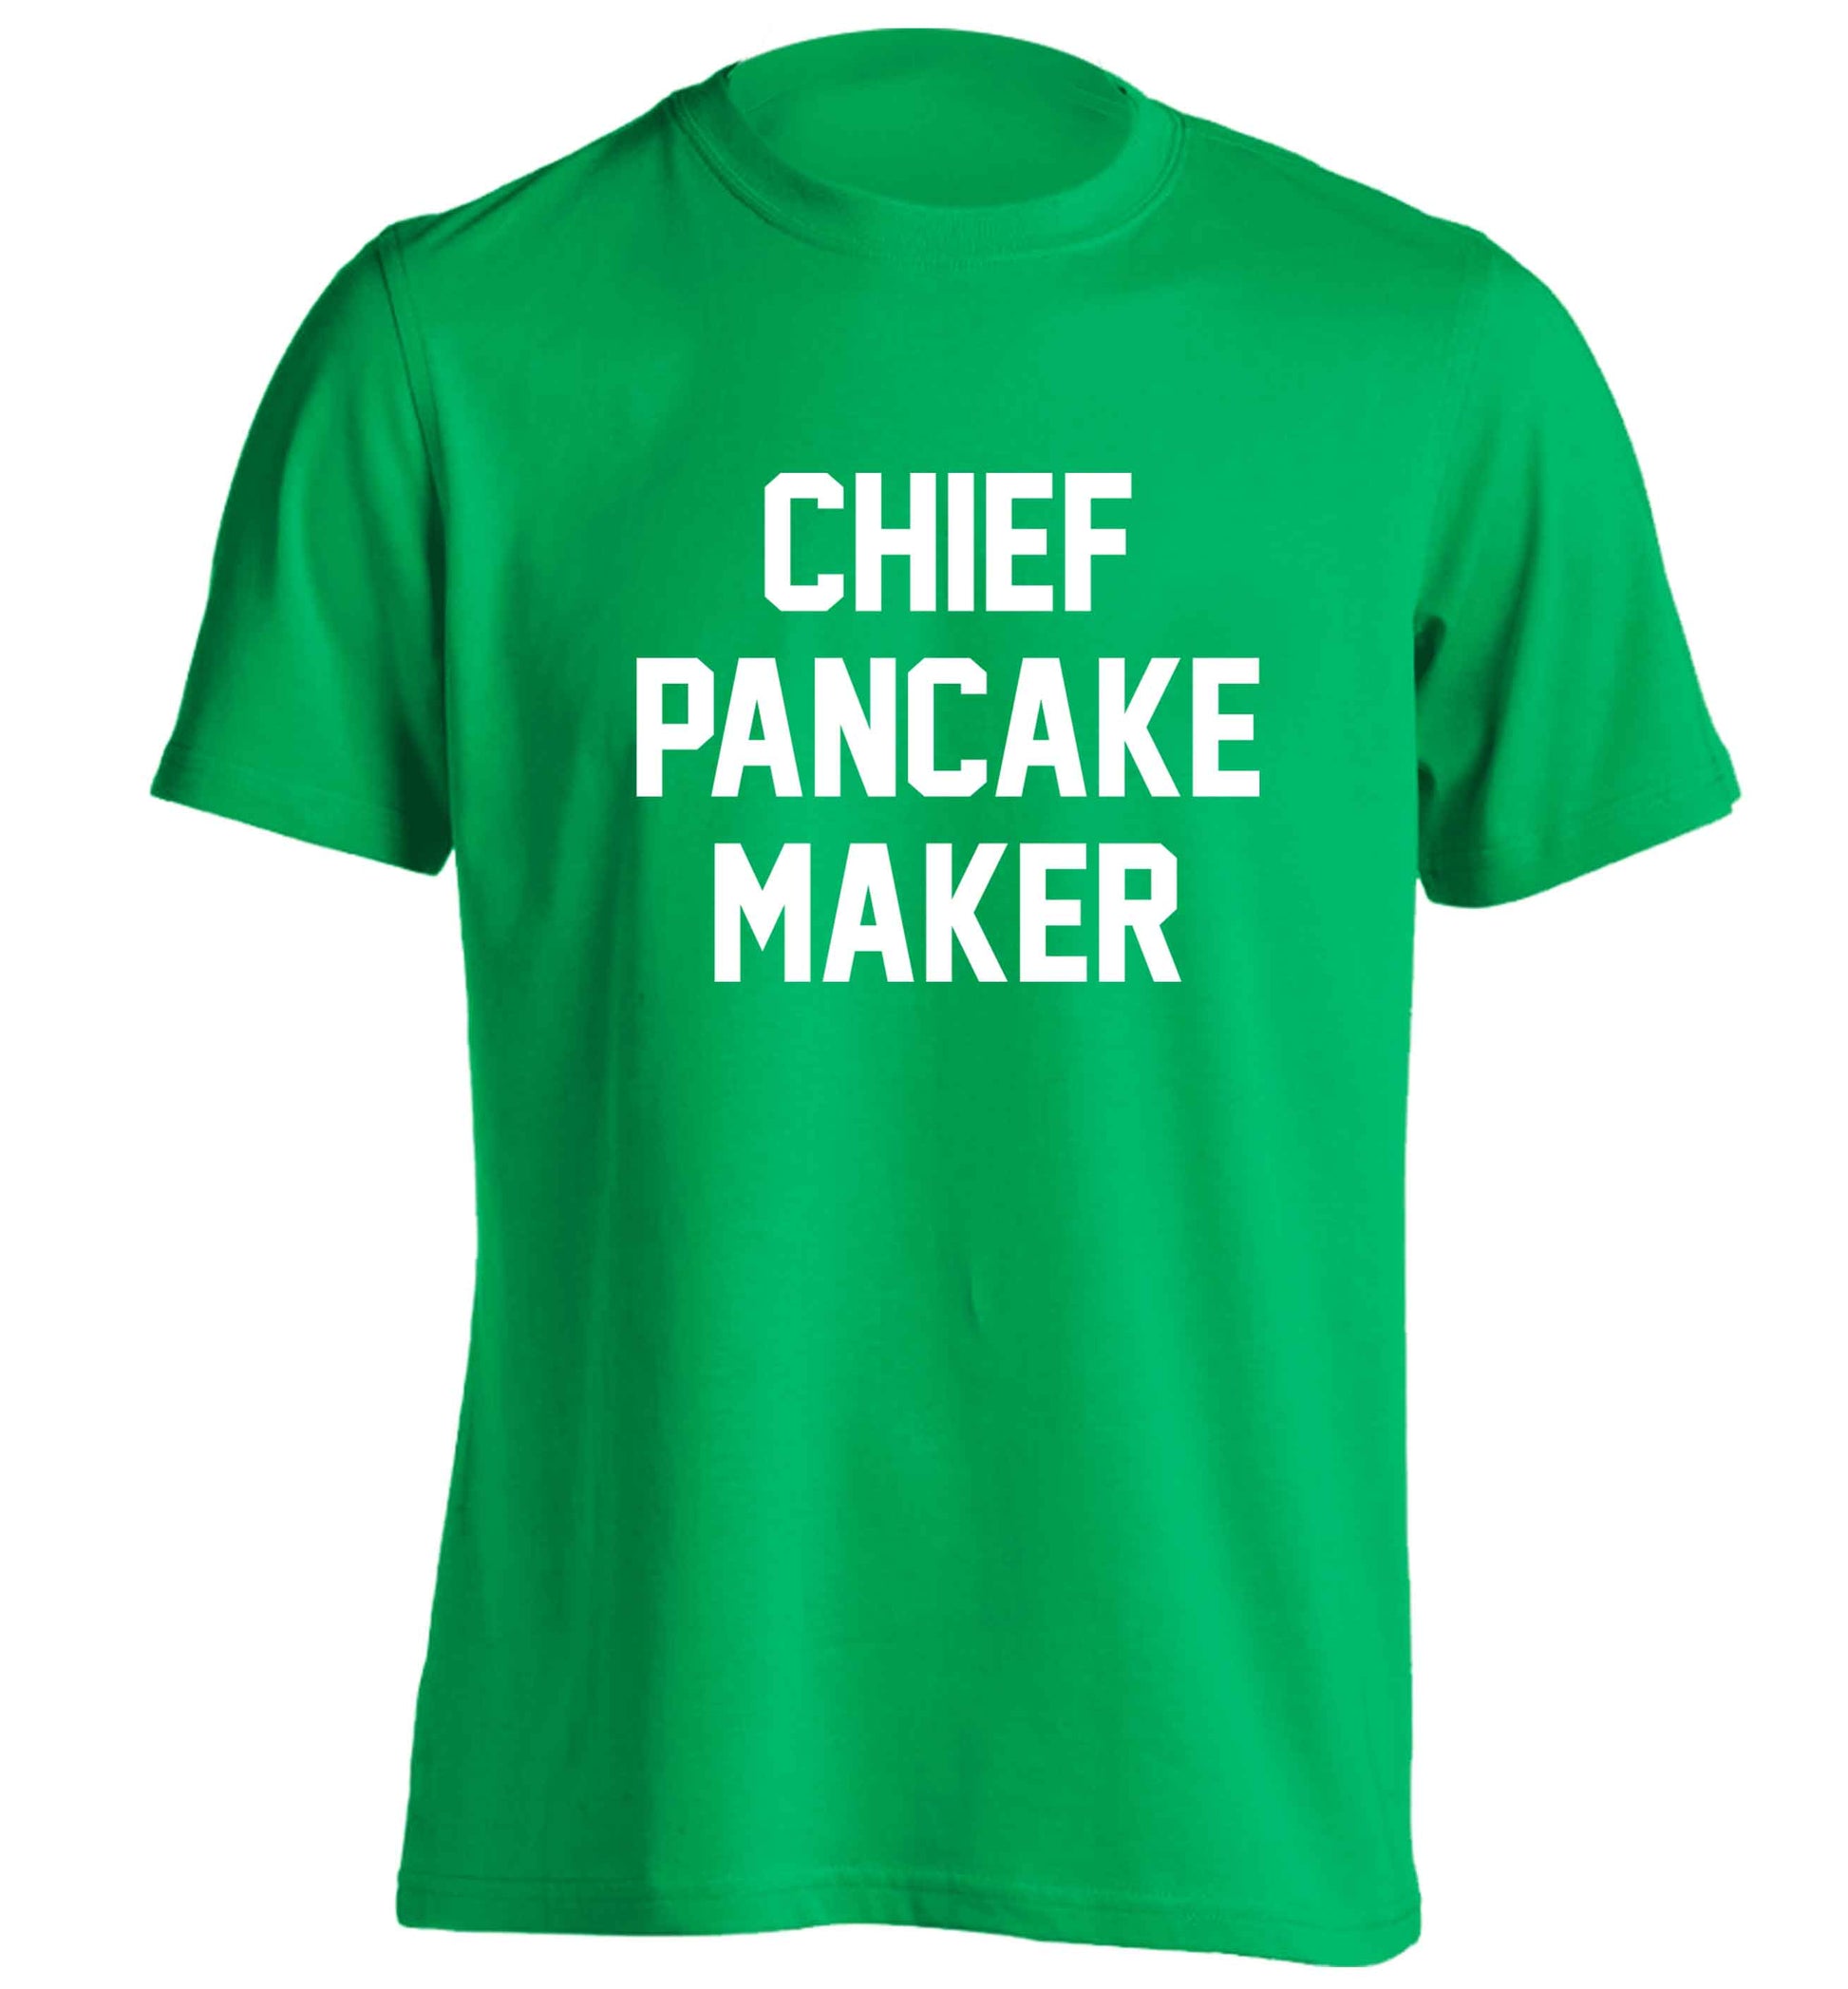 Chief pancake maker adults unisex green Tshirt 2XL